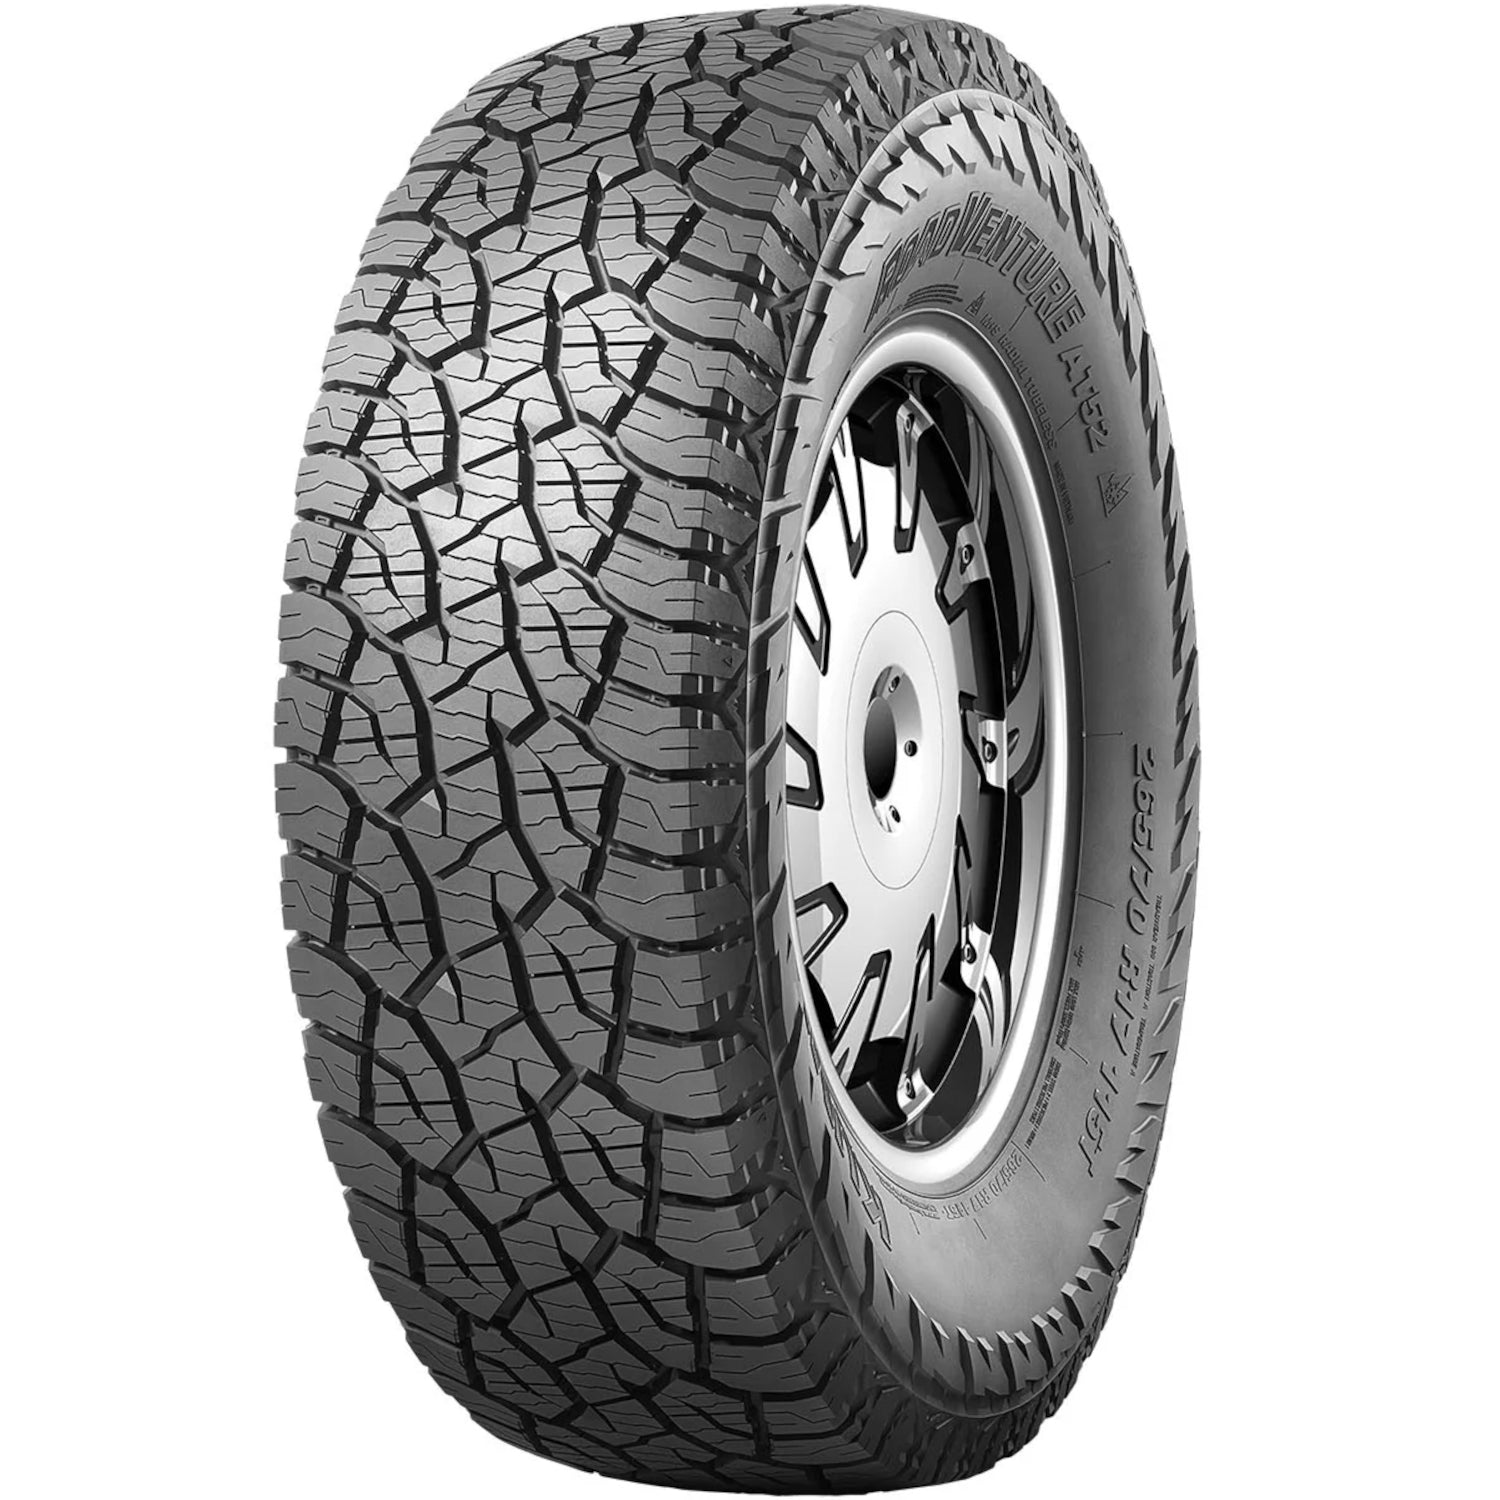 KUMHO ROAD VENTURE AT52 LT235/80R17 (31.8X9.3R 17) Tires